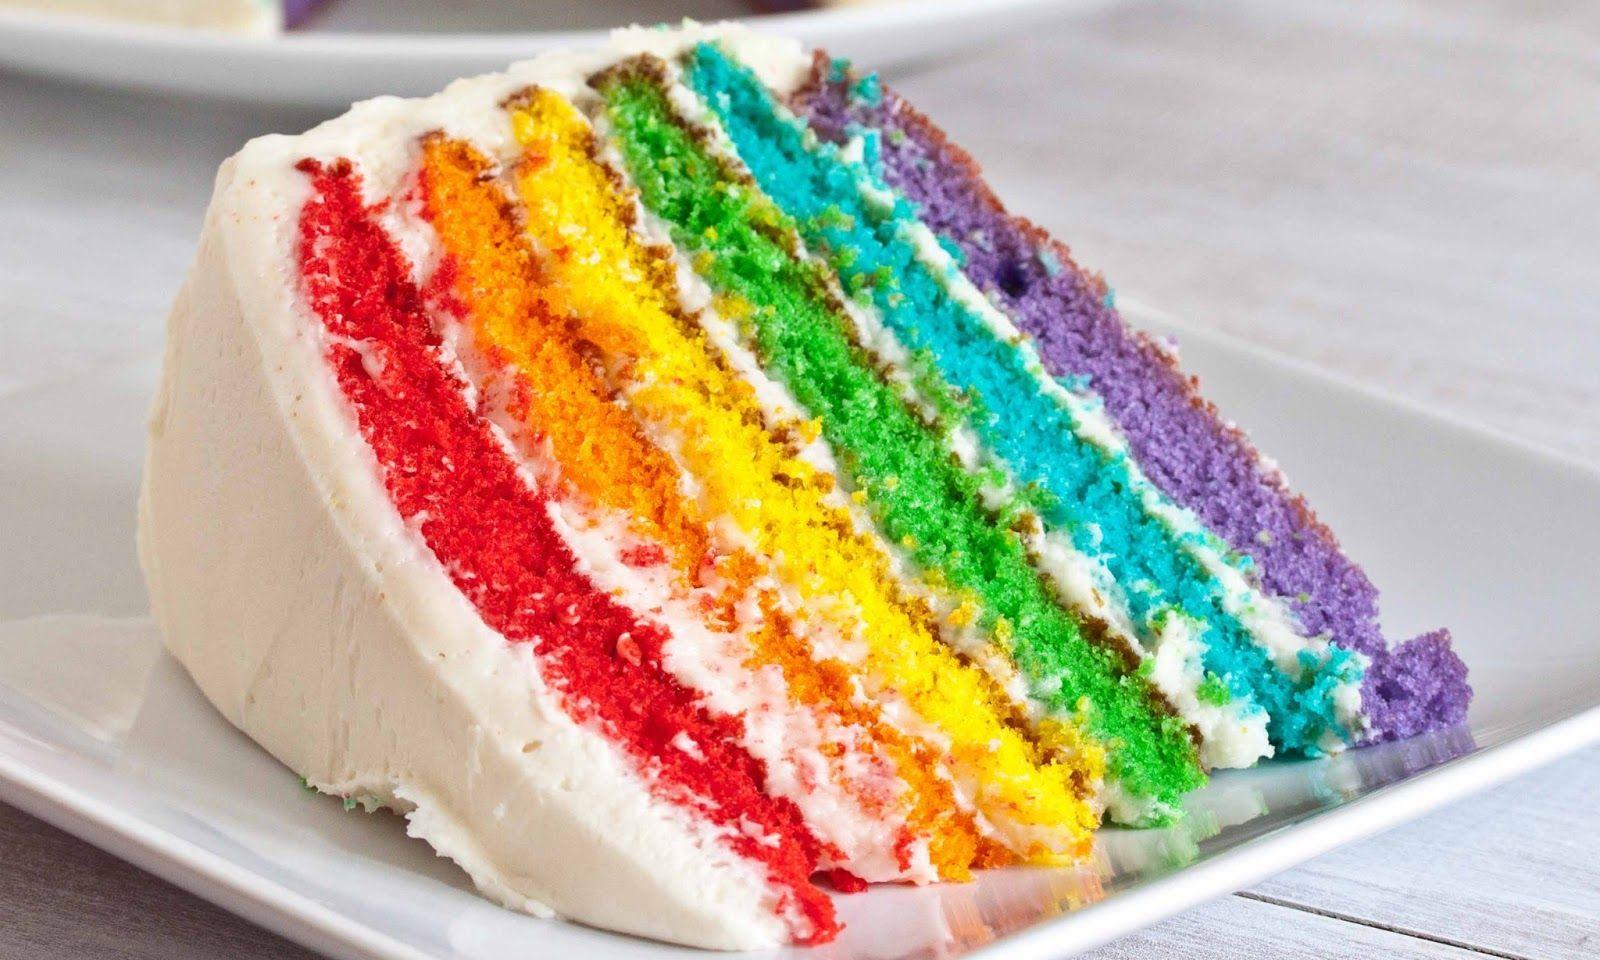 Rainbow Cake Wallpaper